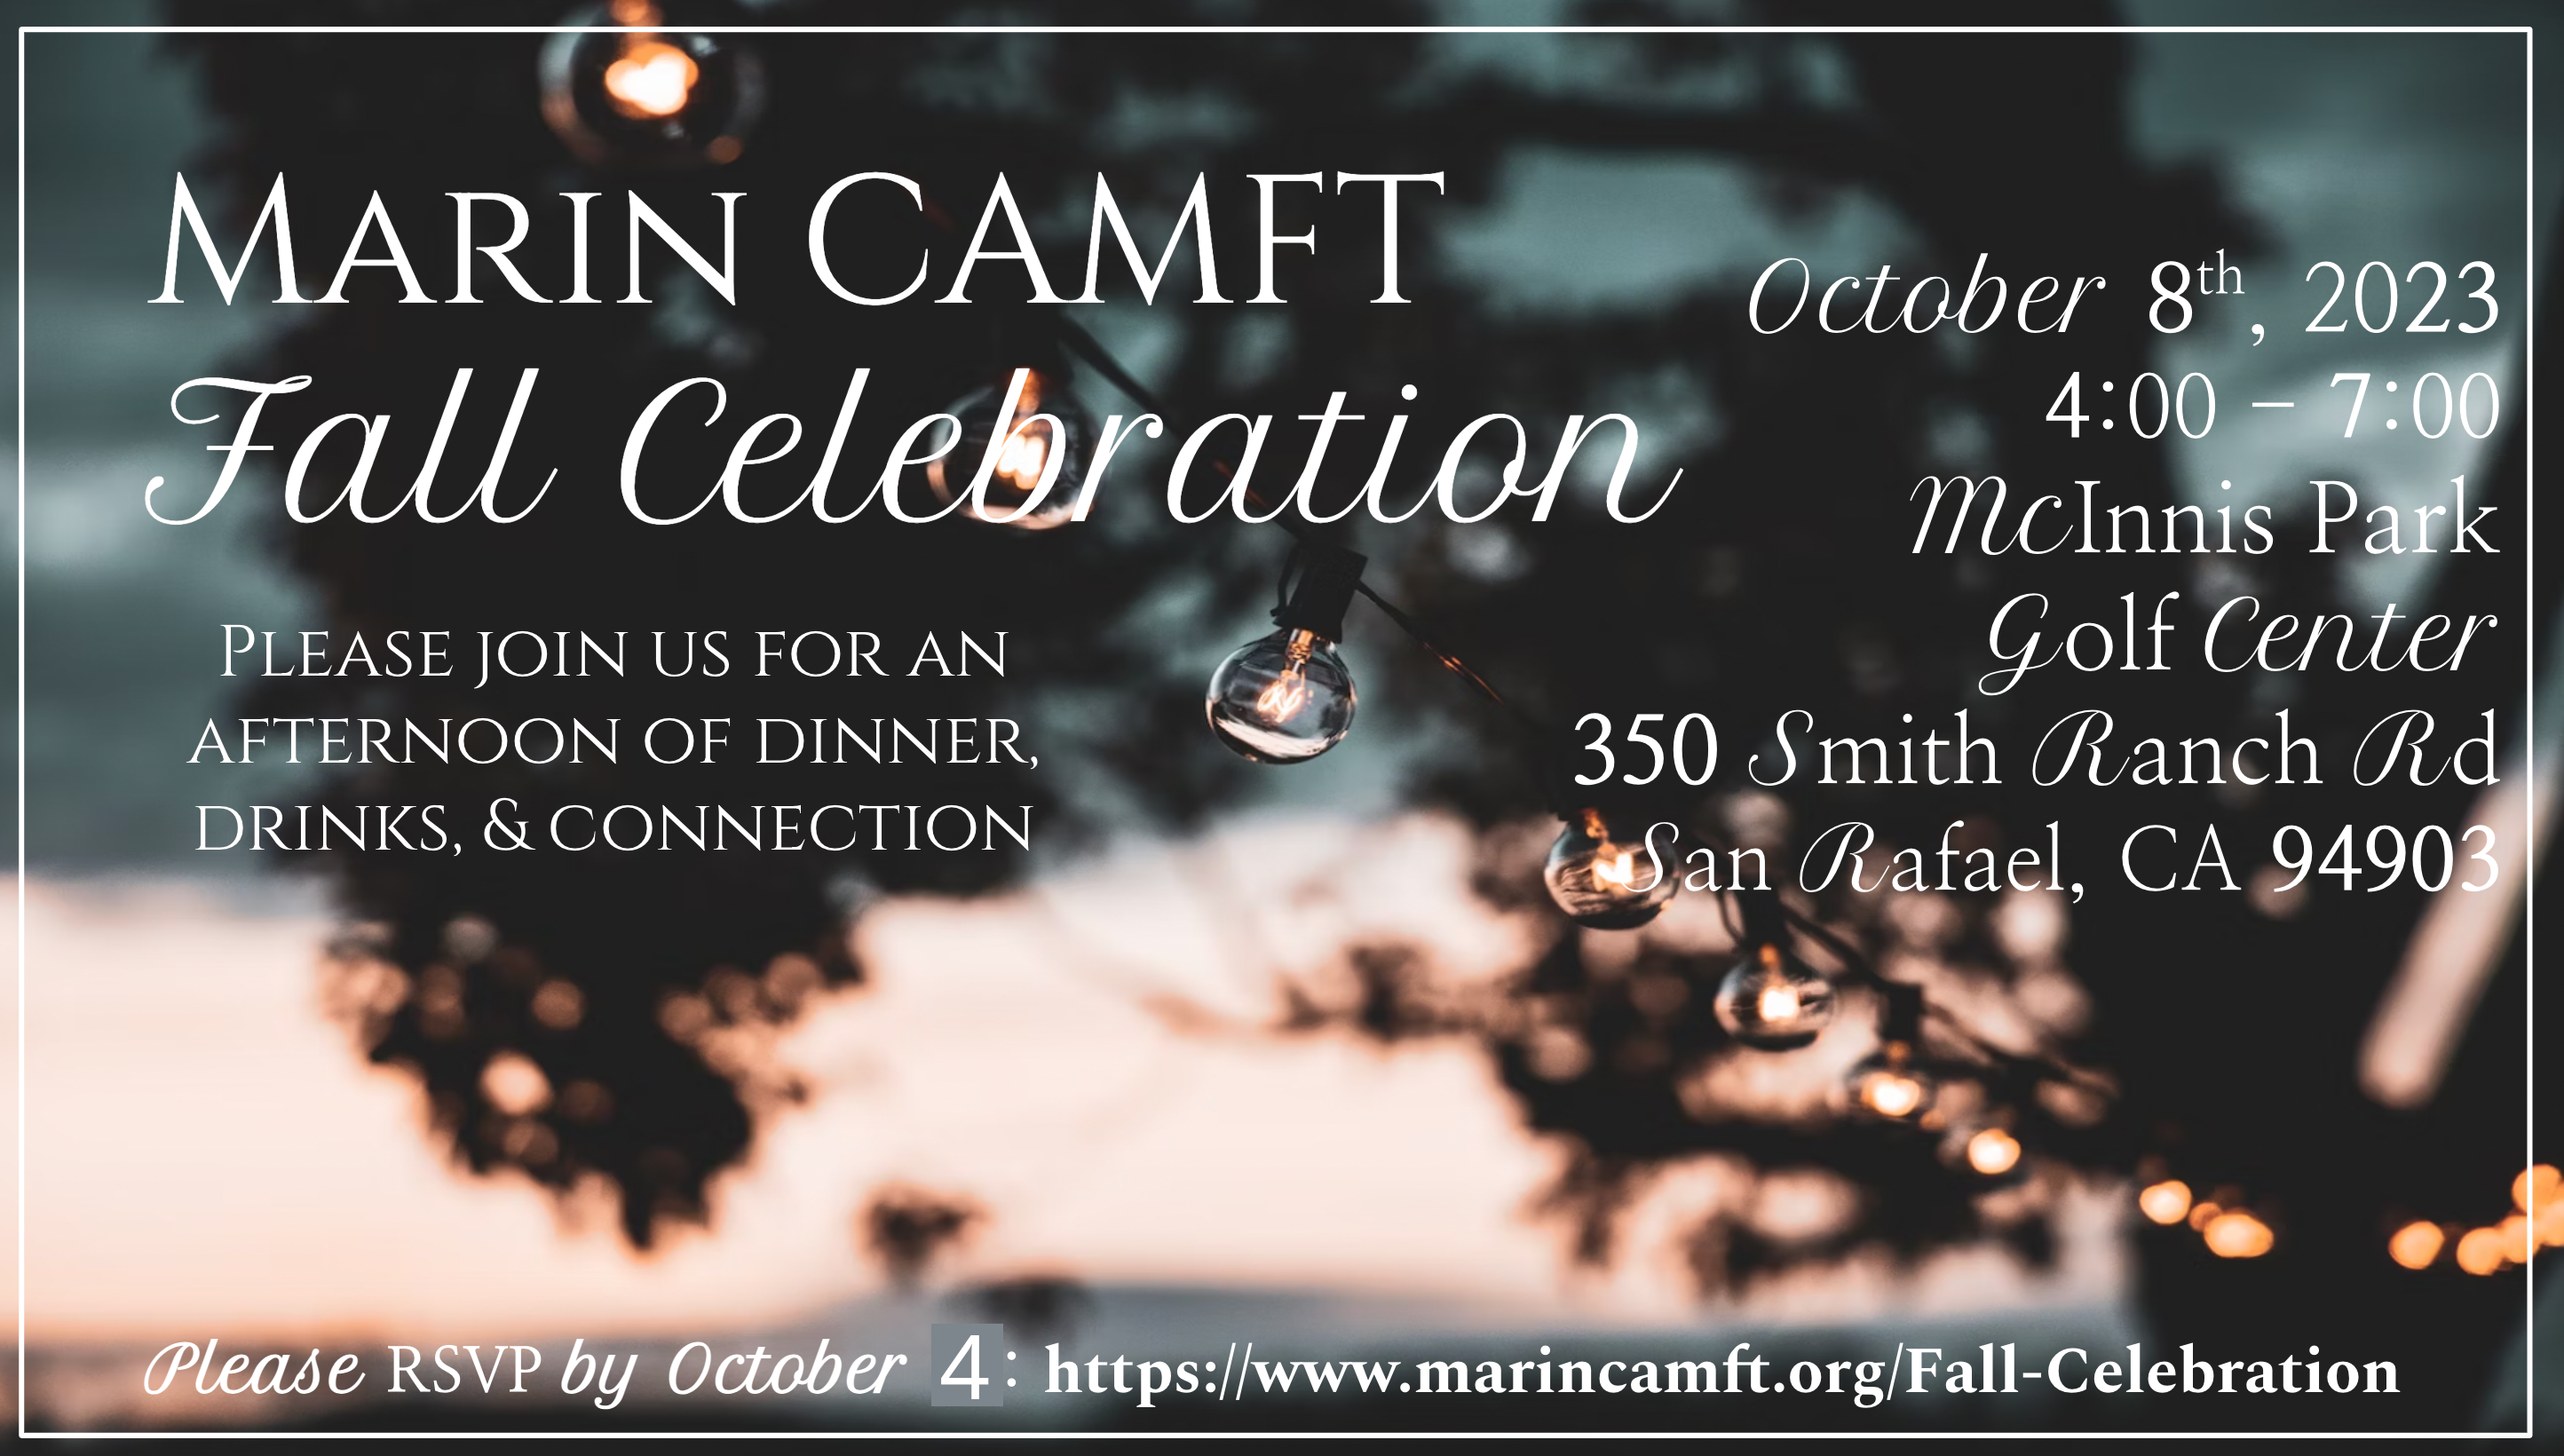 Marin CAMFT Fall Celebration and Member Meeting October 8th